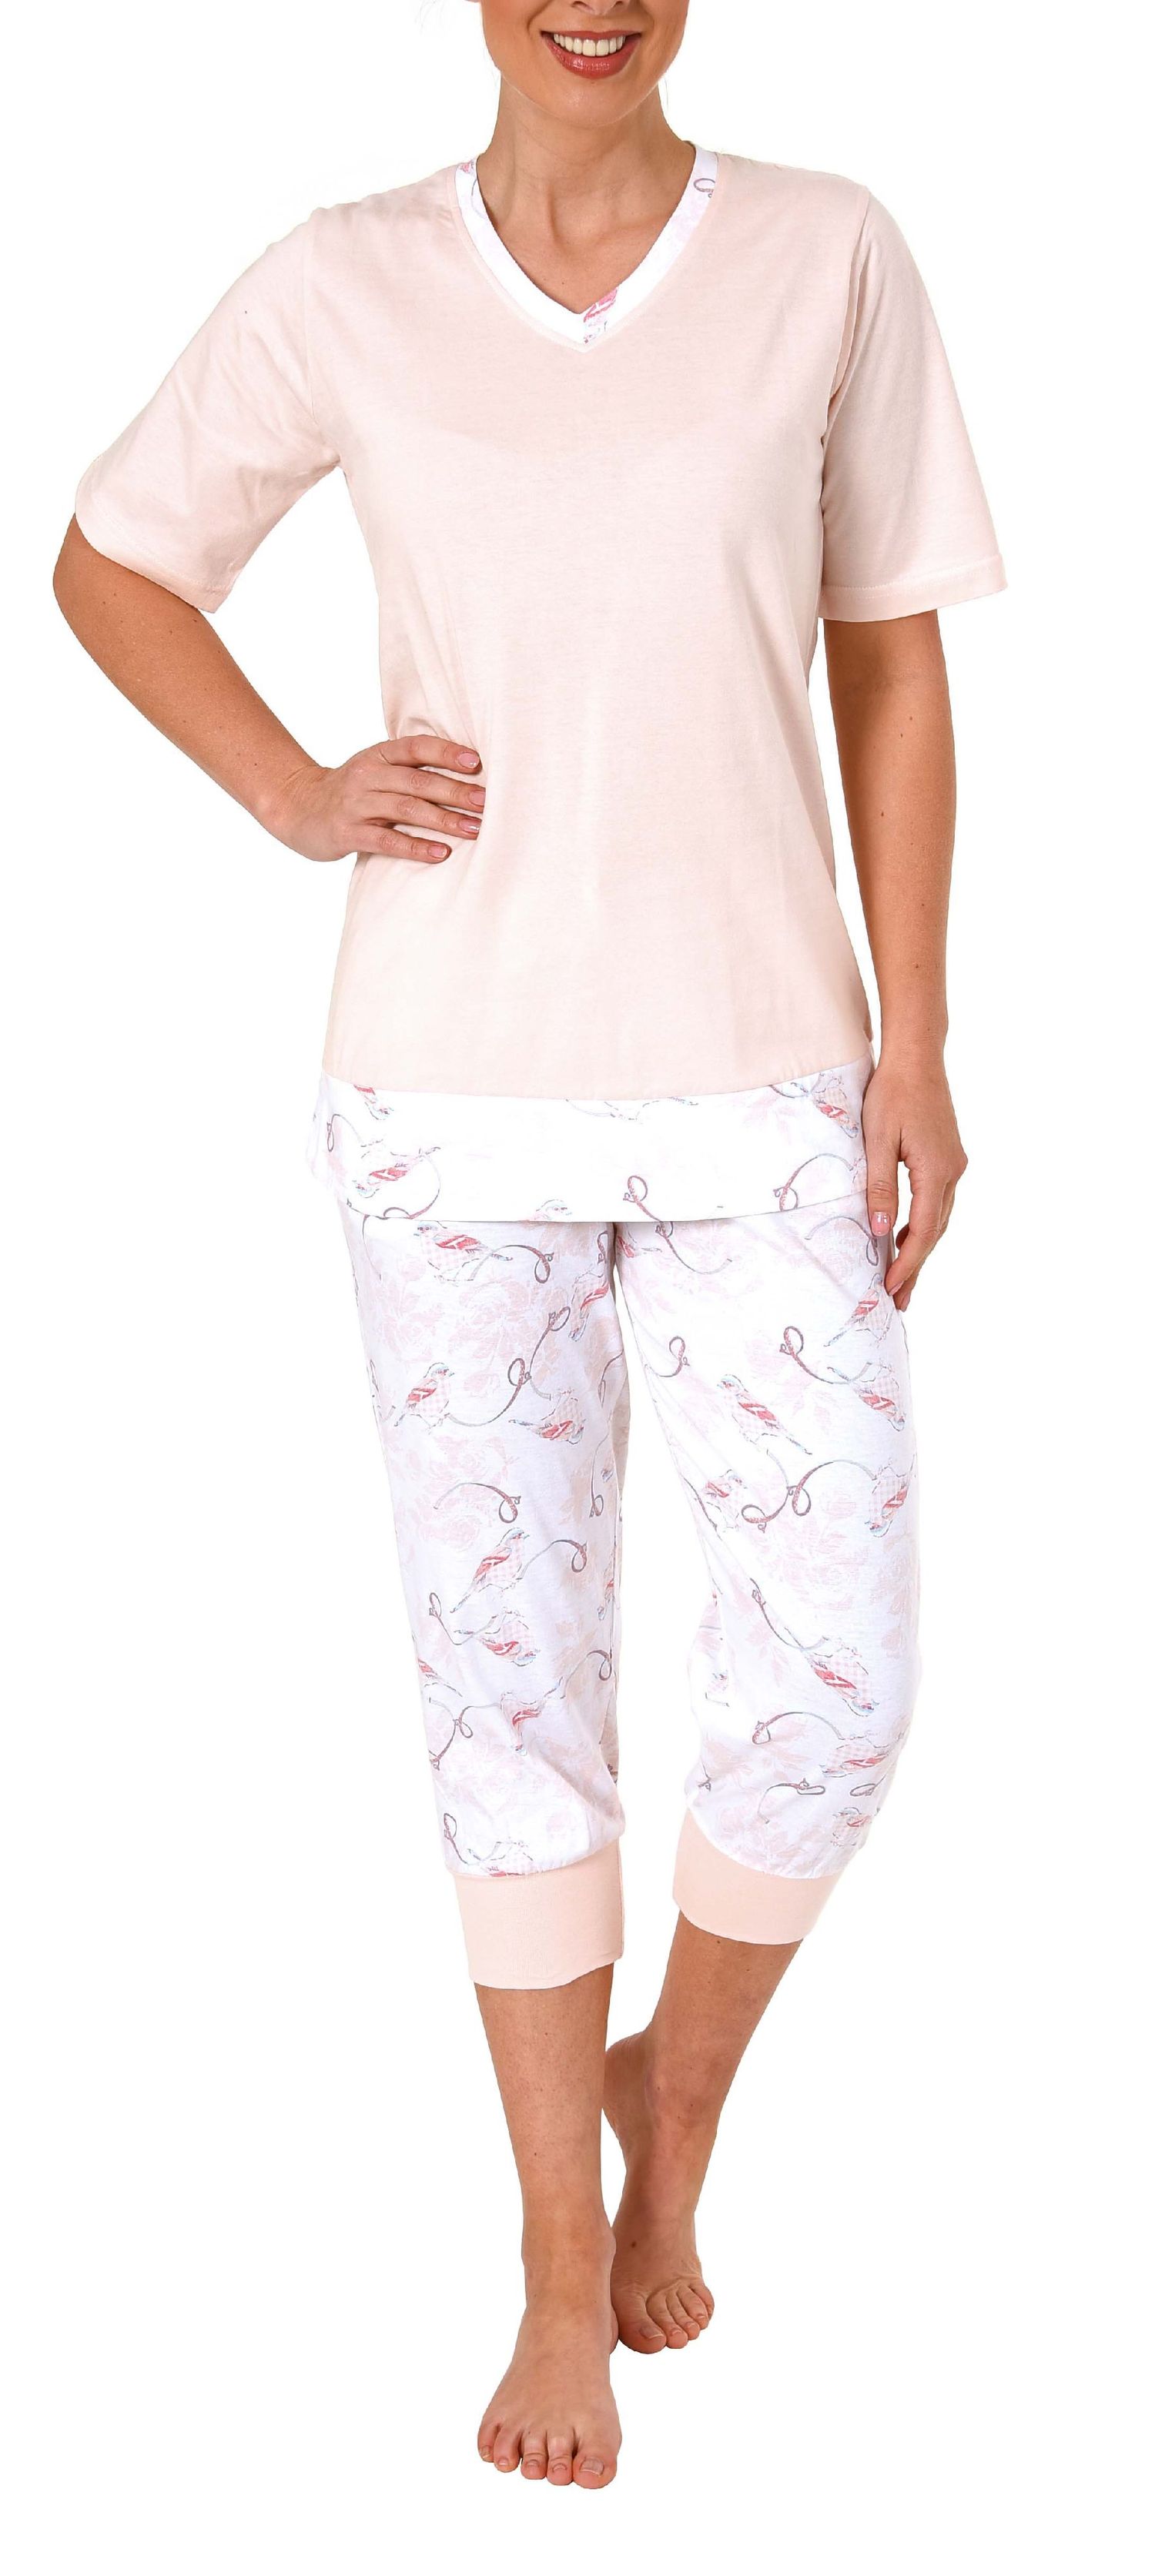 Eleganter Damen Capri Pyjama Schlafanzug kurzarm, Caprihose mit Bündchen, florales Muster 191 204 90 106